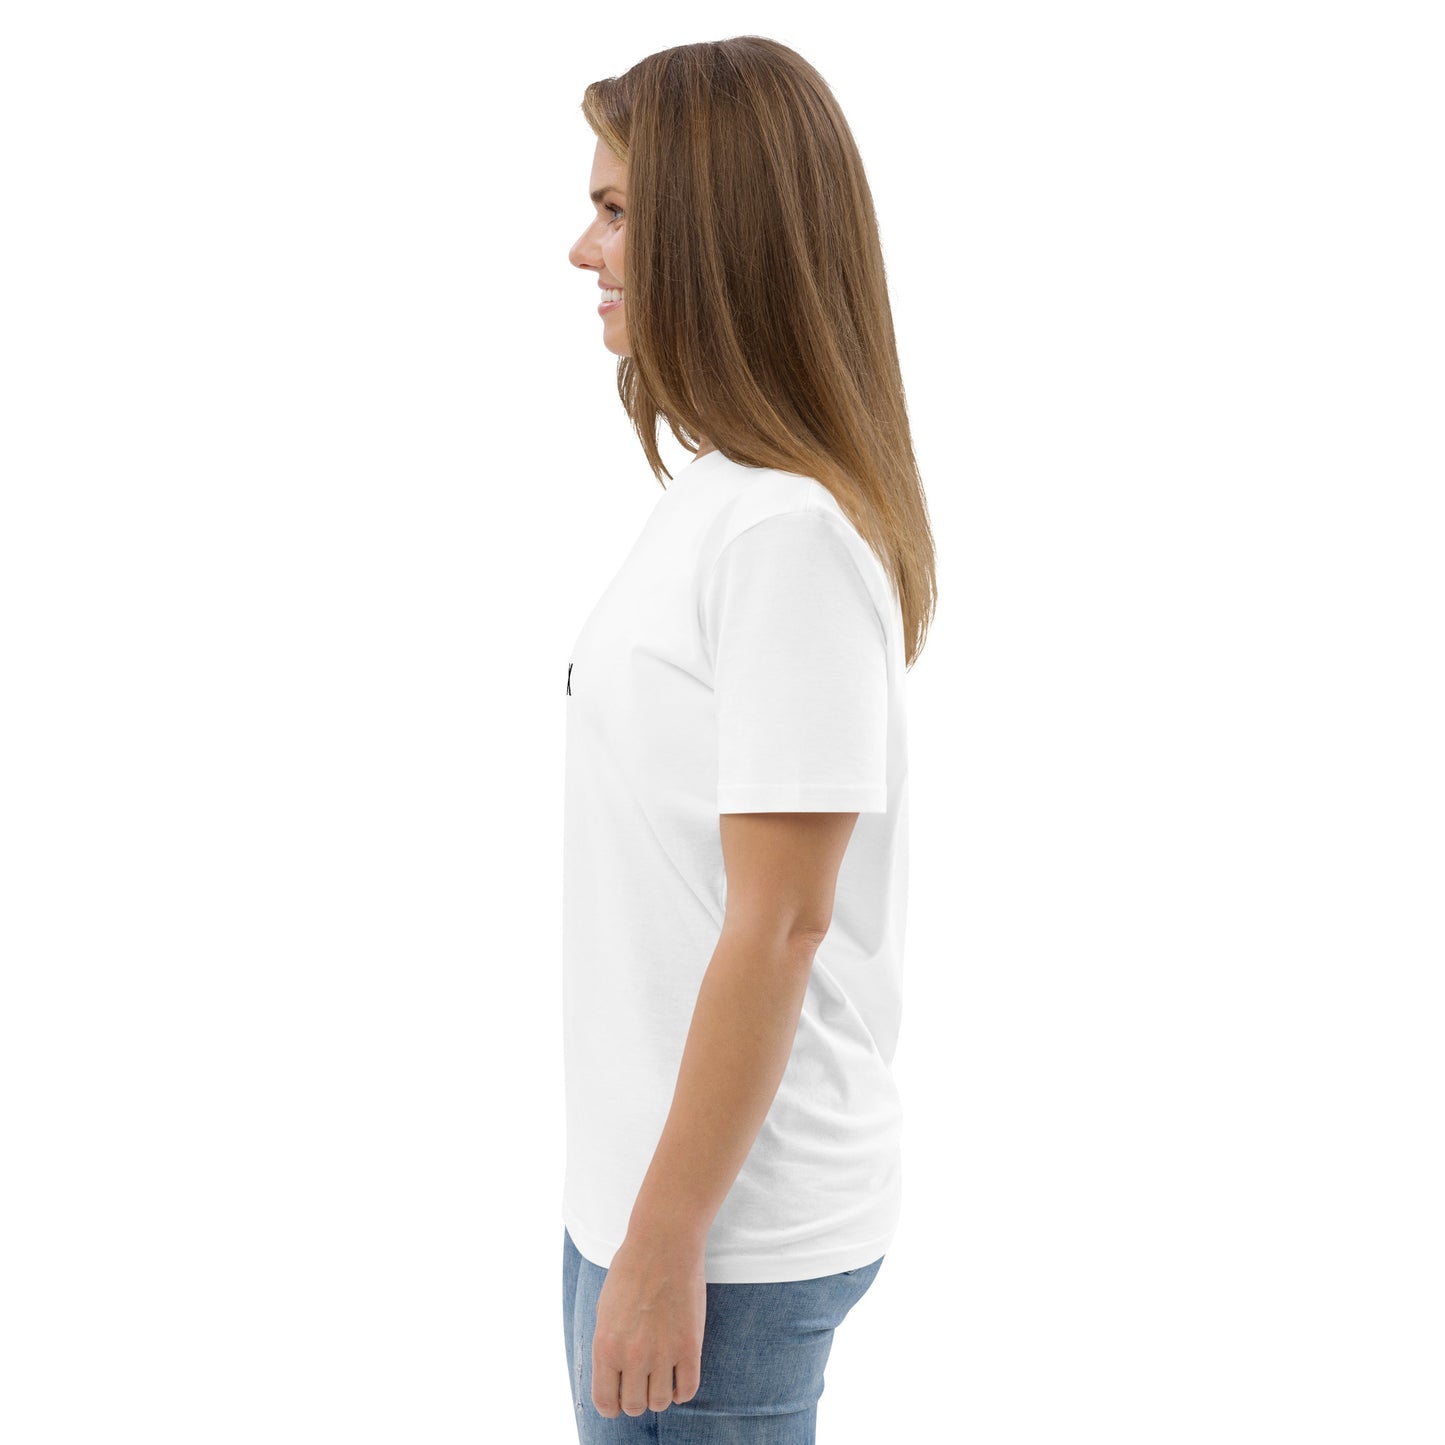 T-shirt coton bio Pedromax femme